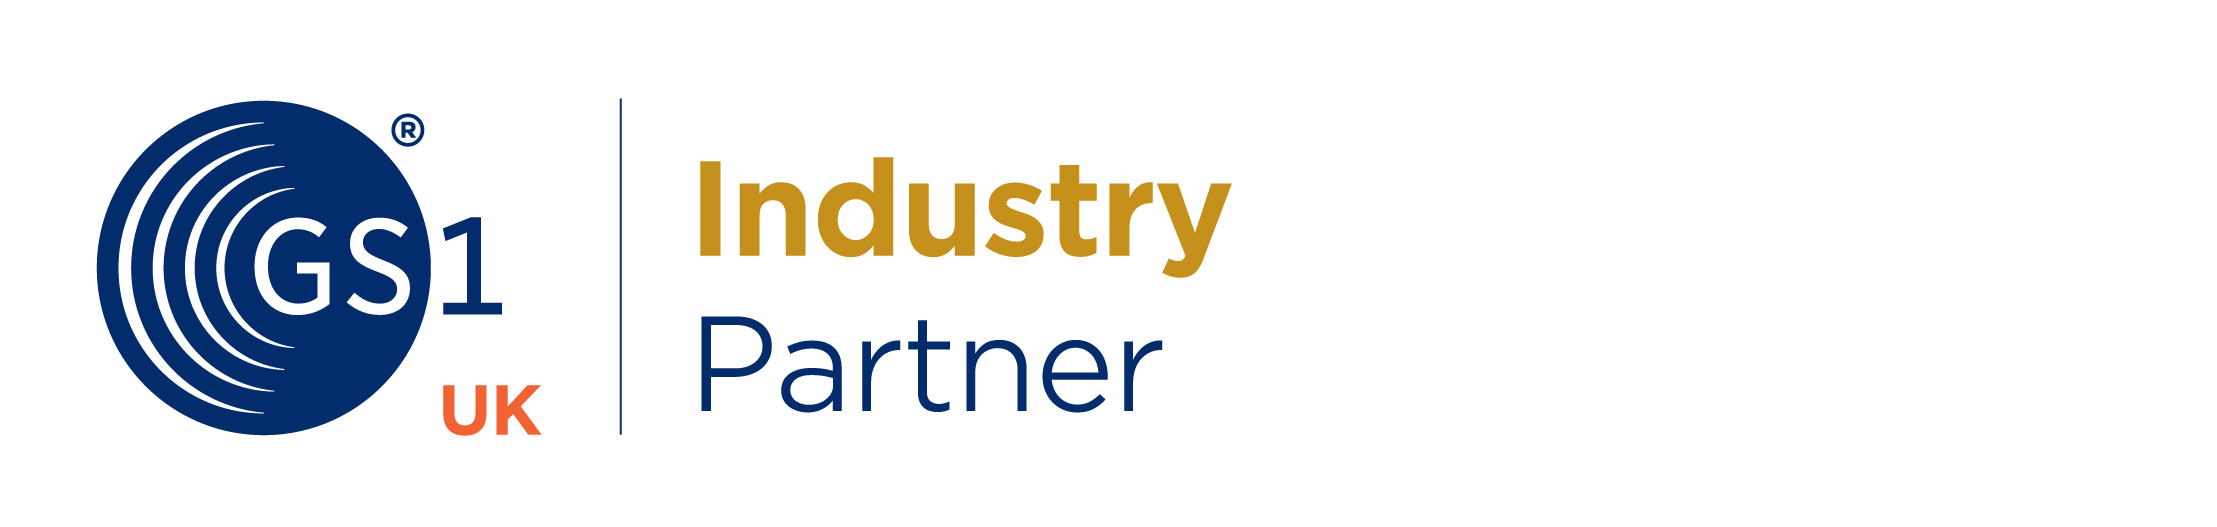 GS1 UK Industry Partner